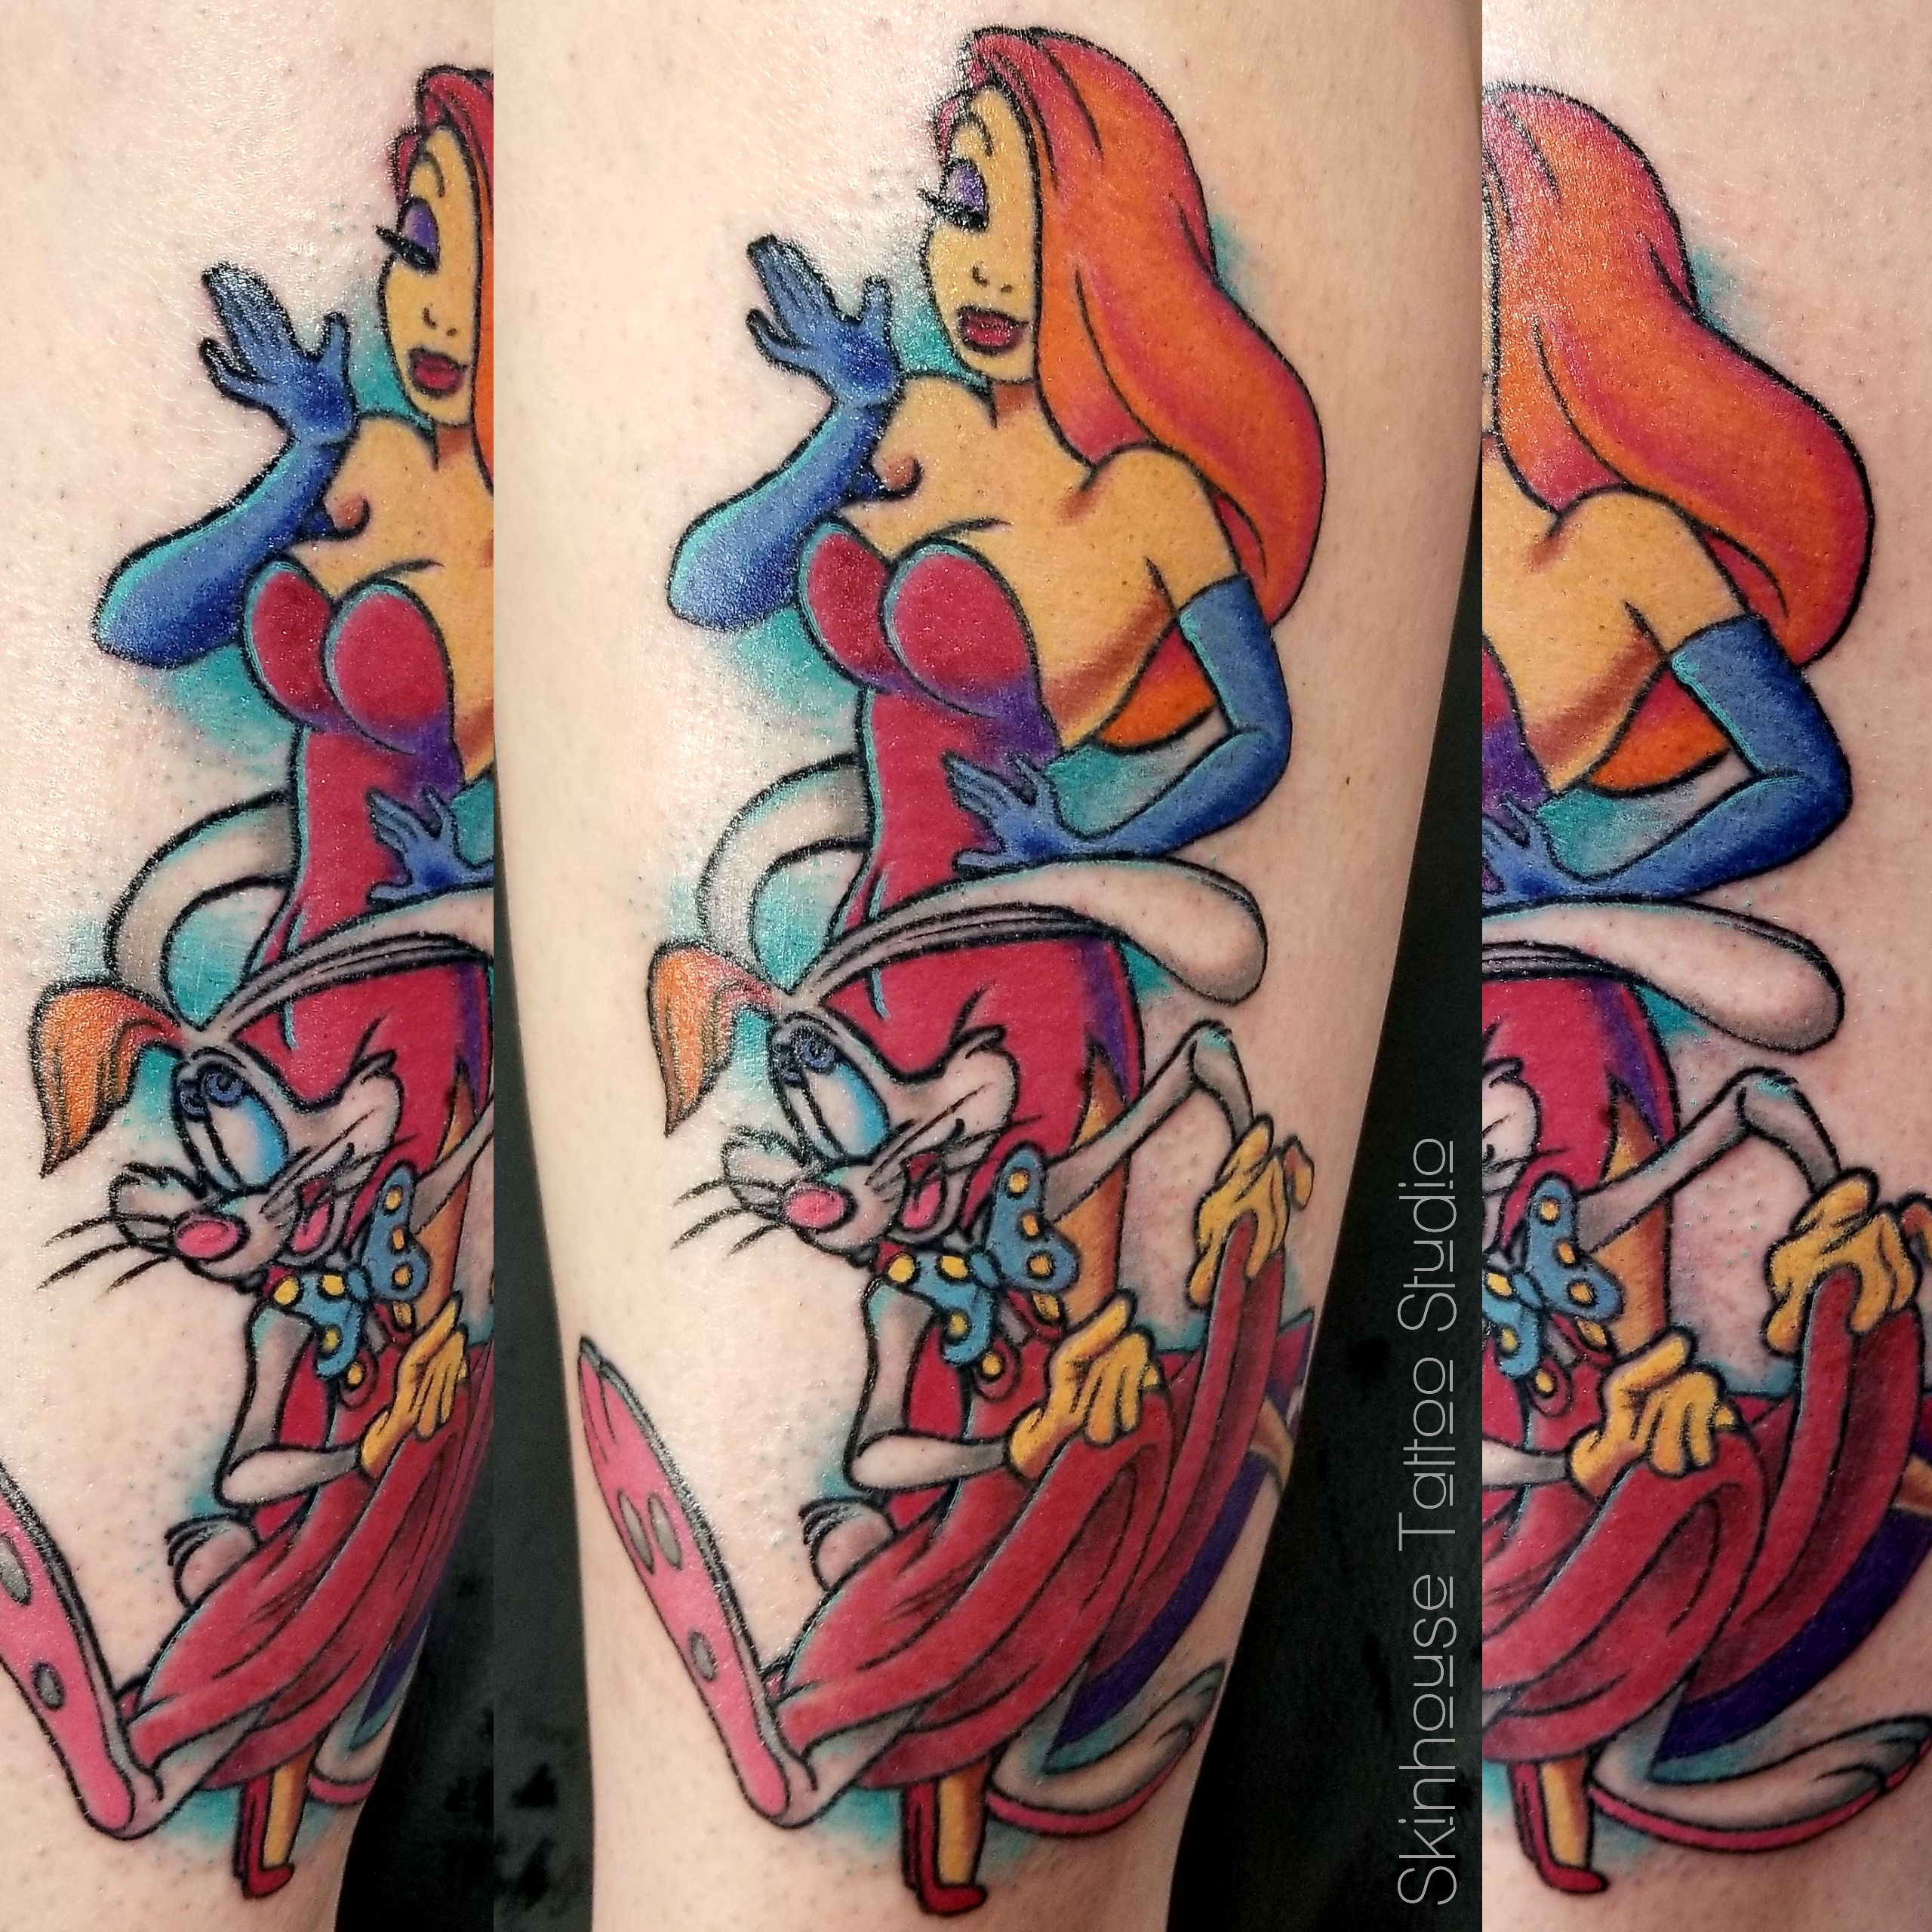 Jessica Rabbit with tattoos by ILoveTrunks on DeviantArt